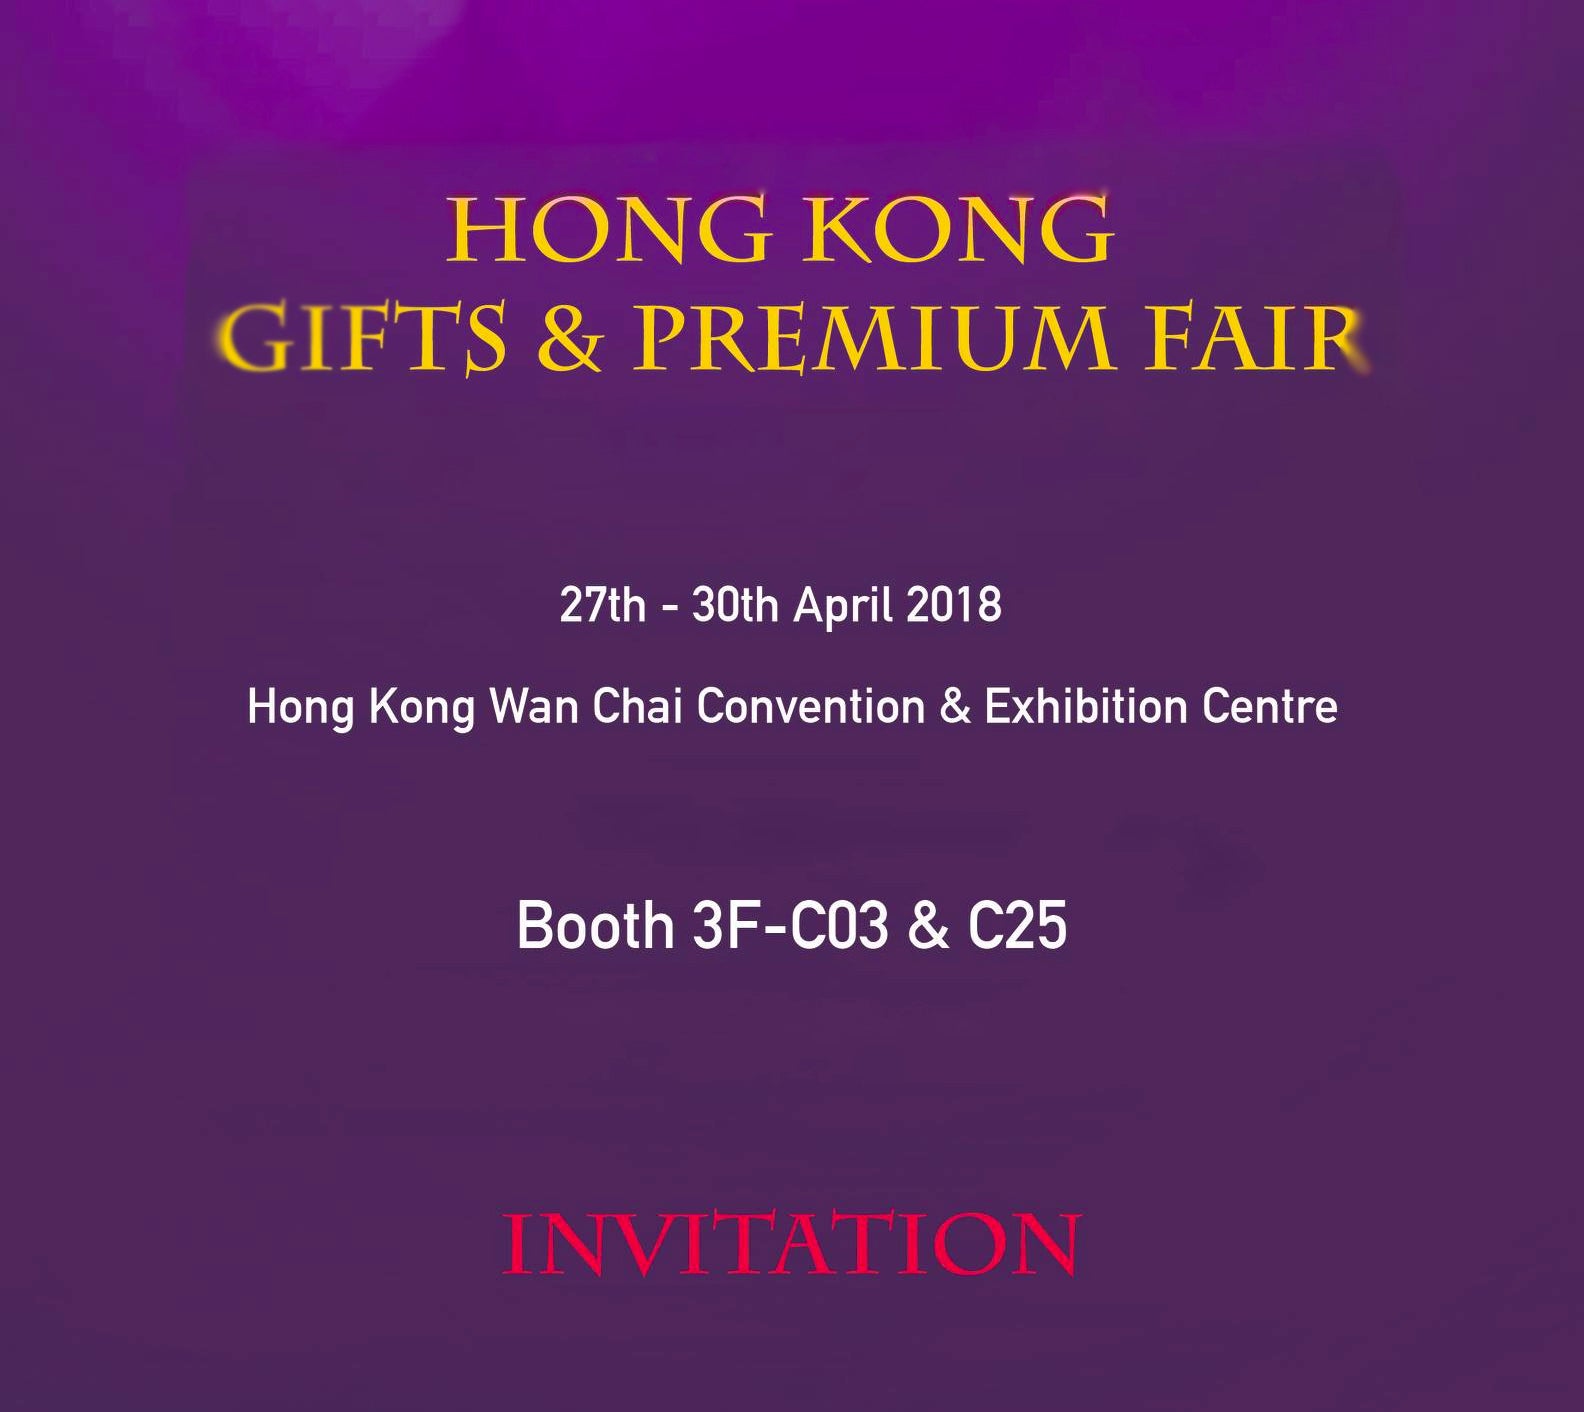 Hong Kong Gifts & Premium Fair 2018